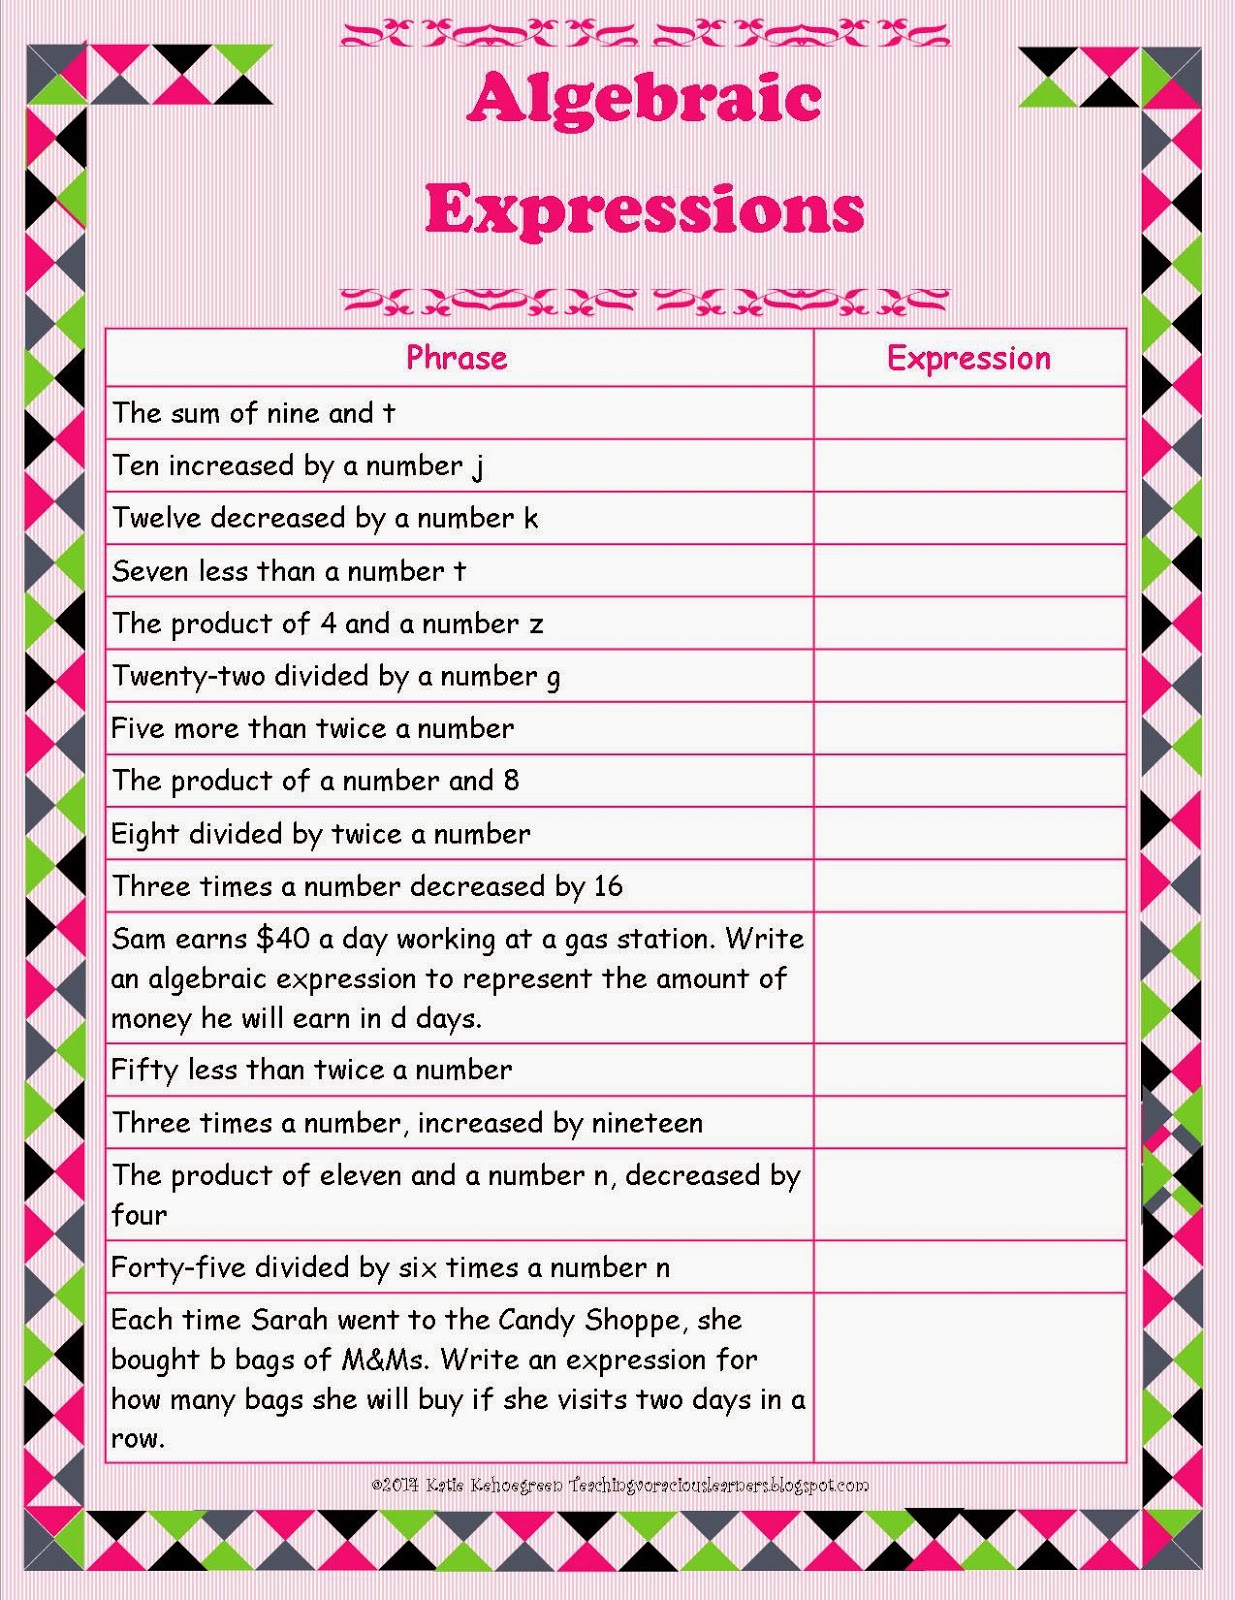 Evaluating Algebraic Expressions Worksheet Algebraic Expressions Types Of Algebraic Expressions with